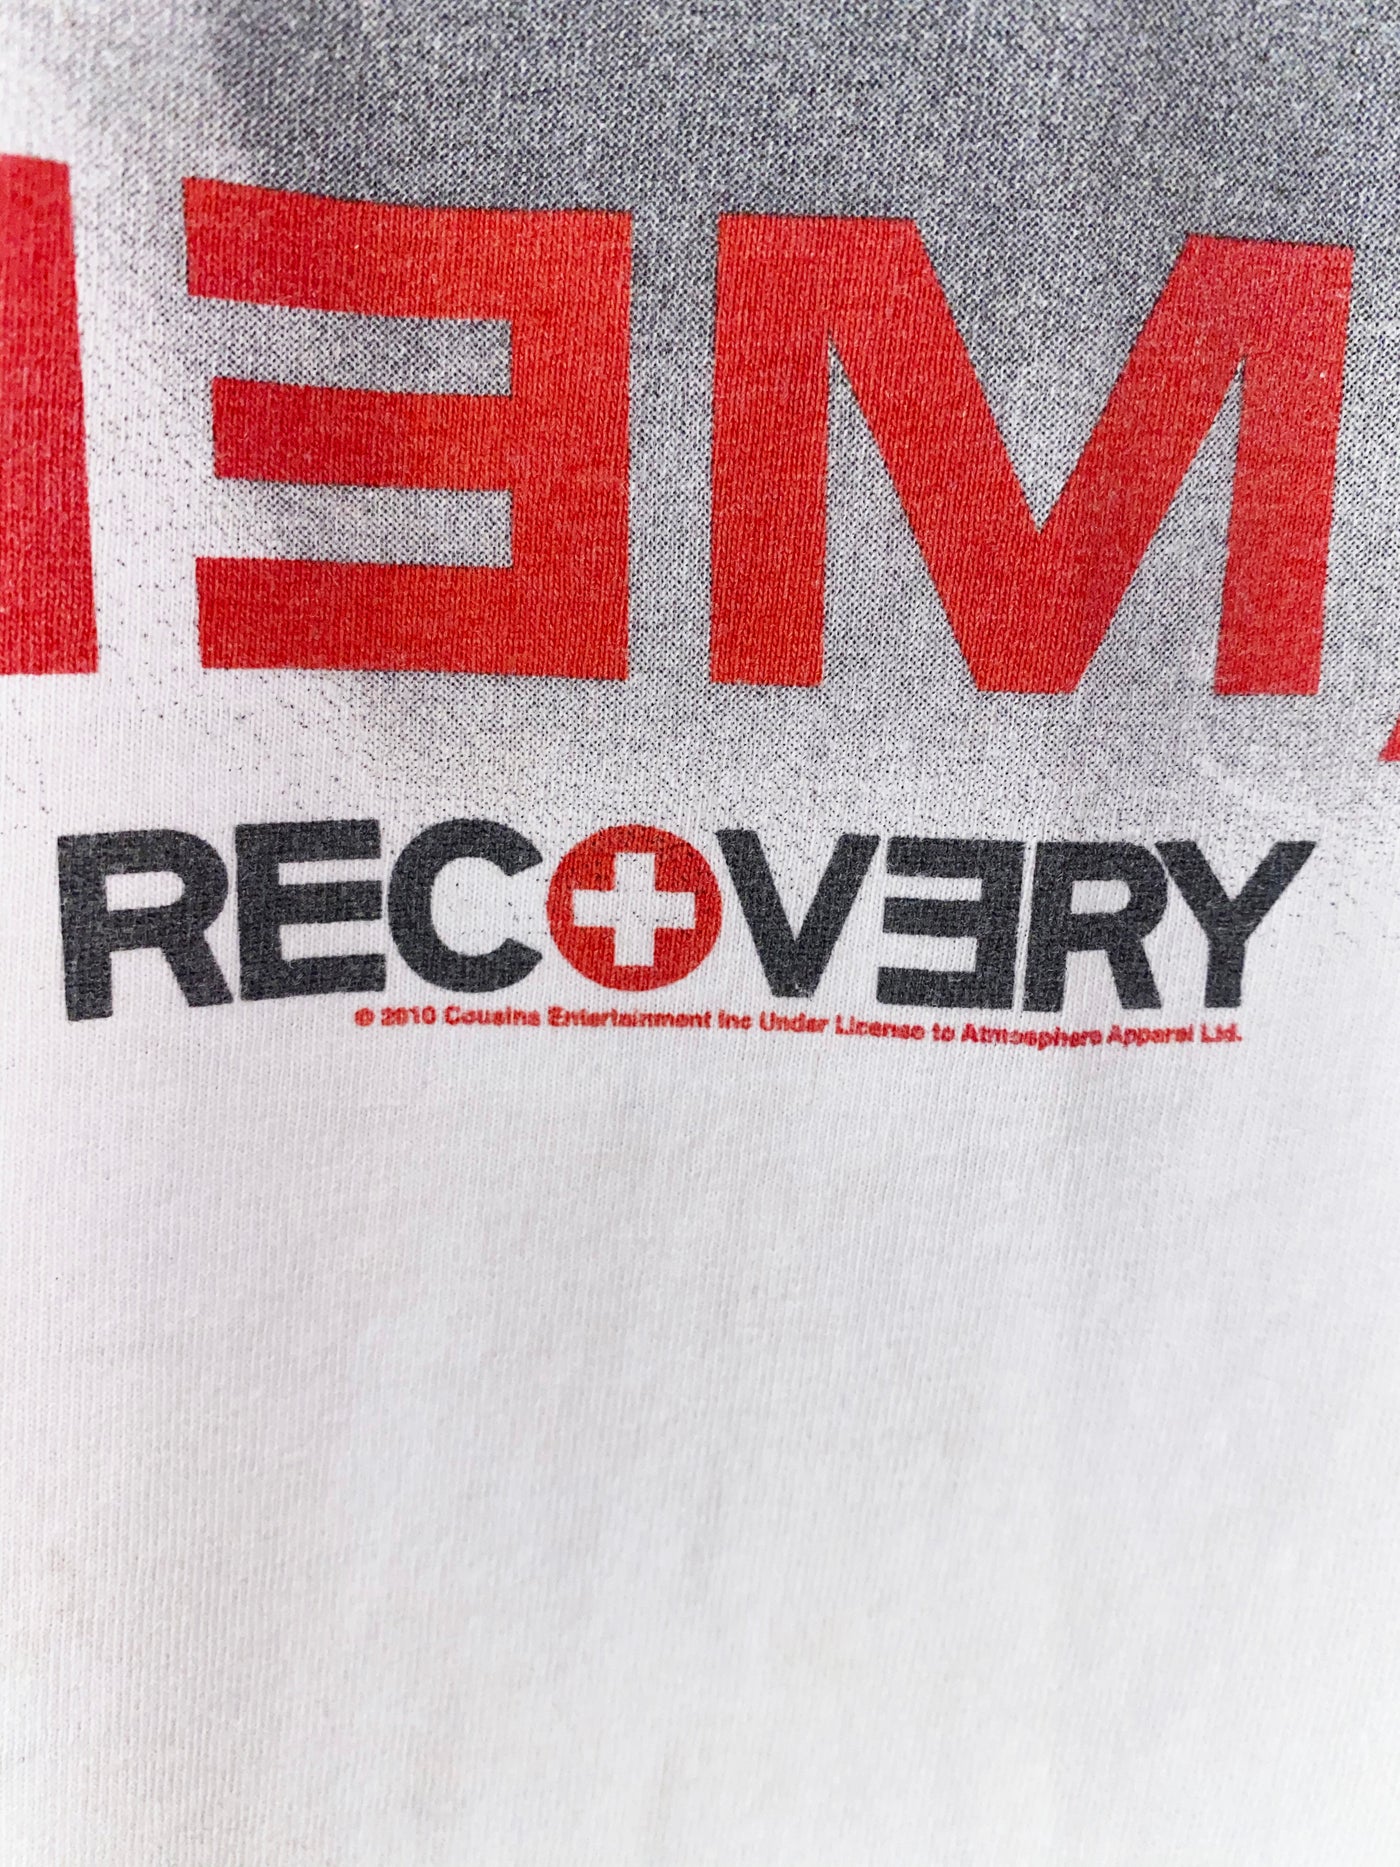 Vintage Eminem Recovery Album T-Shirt